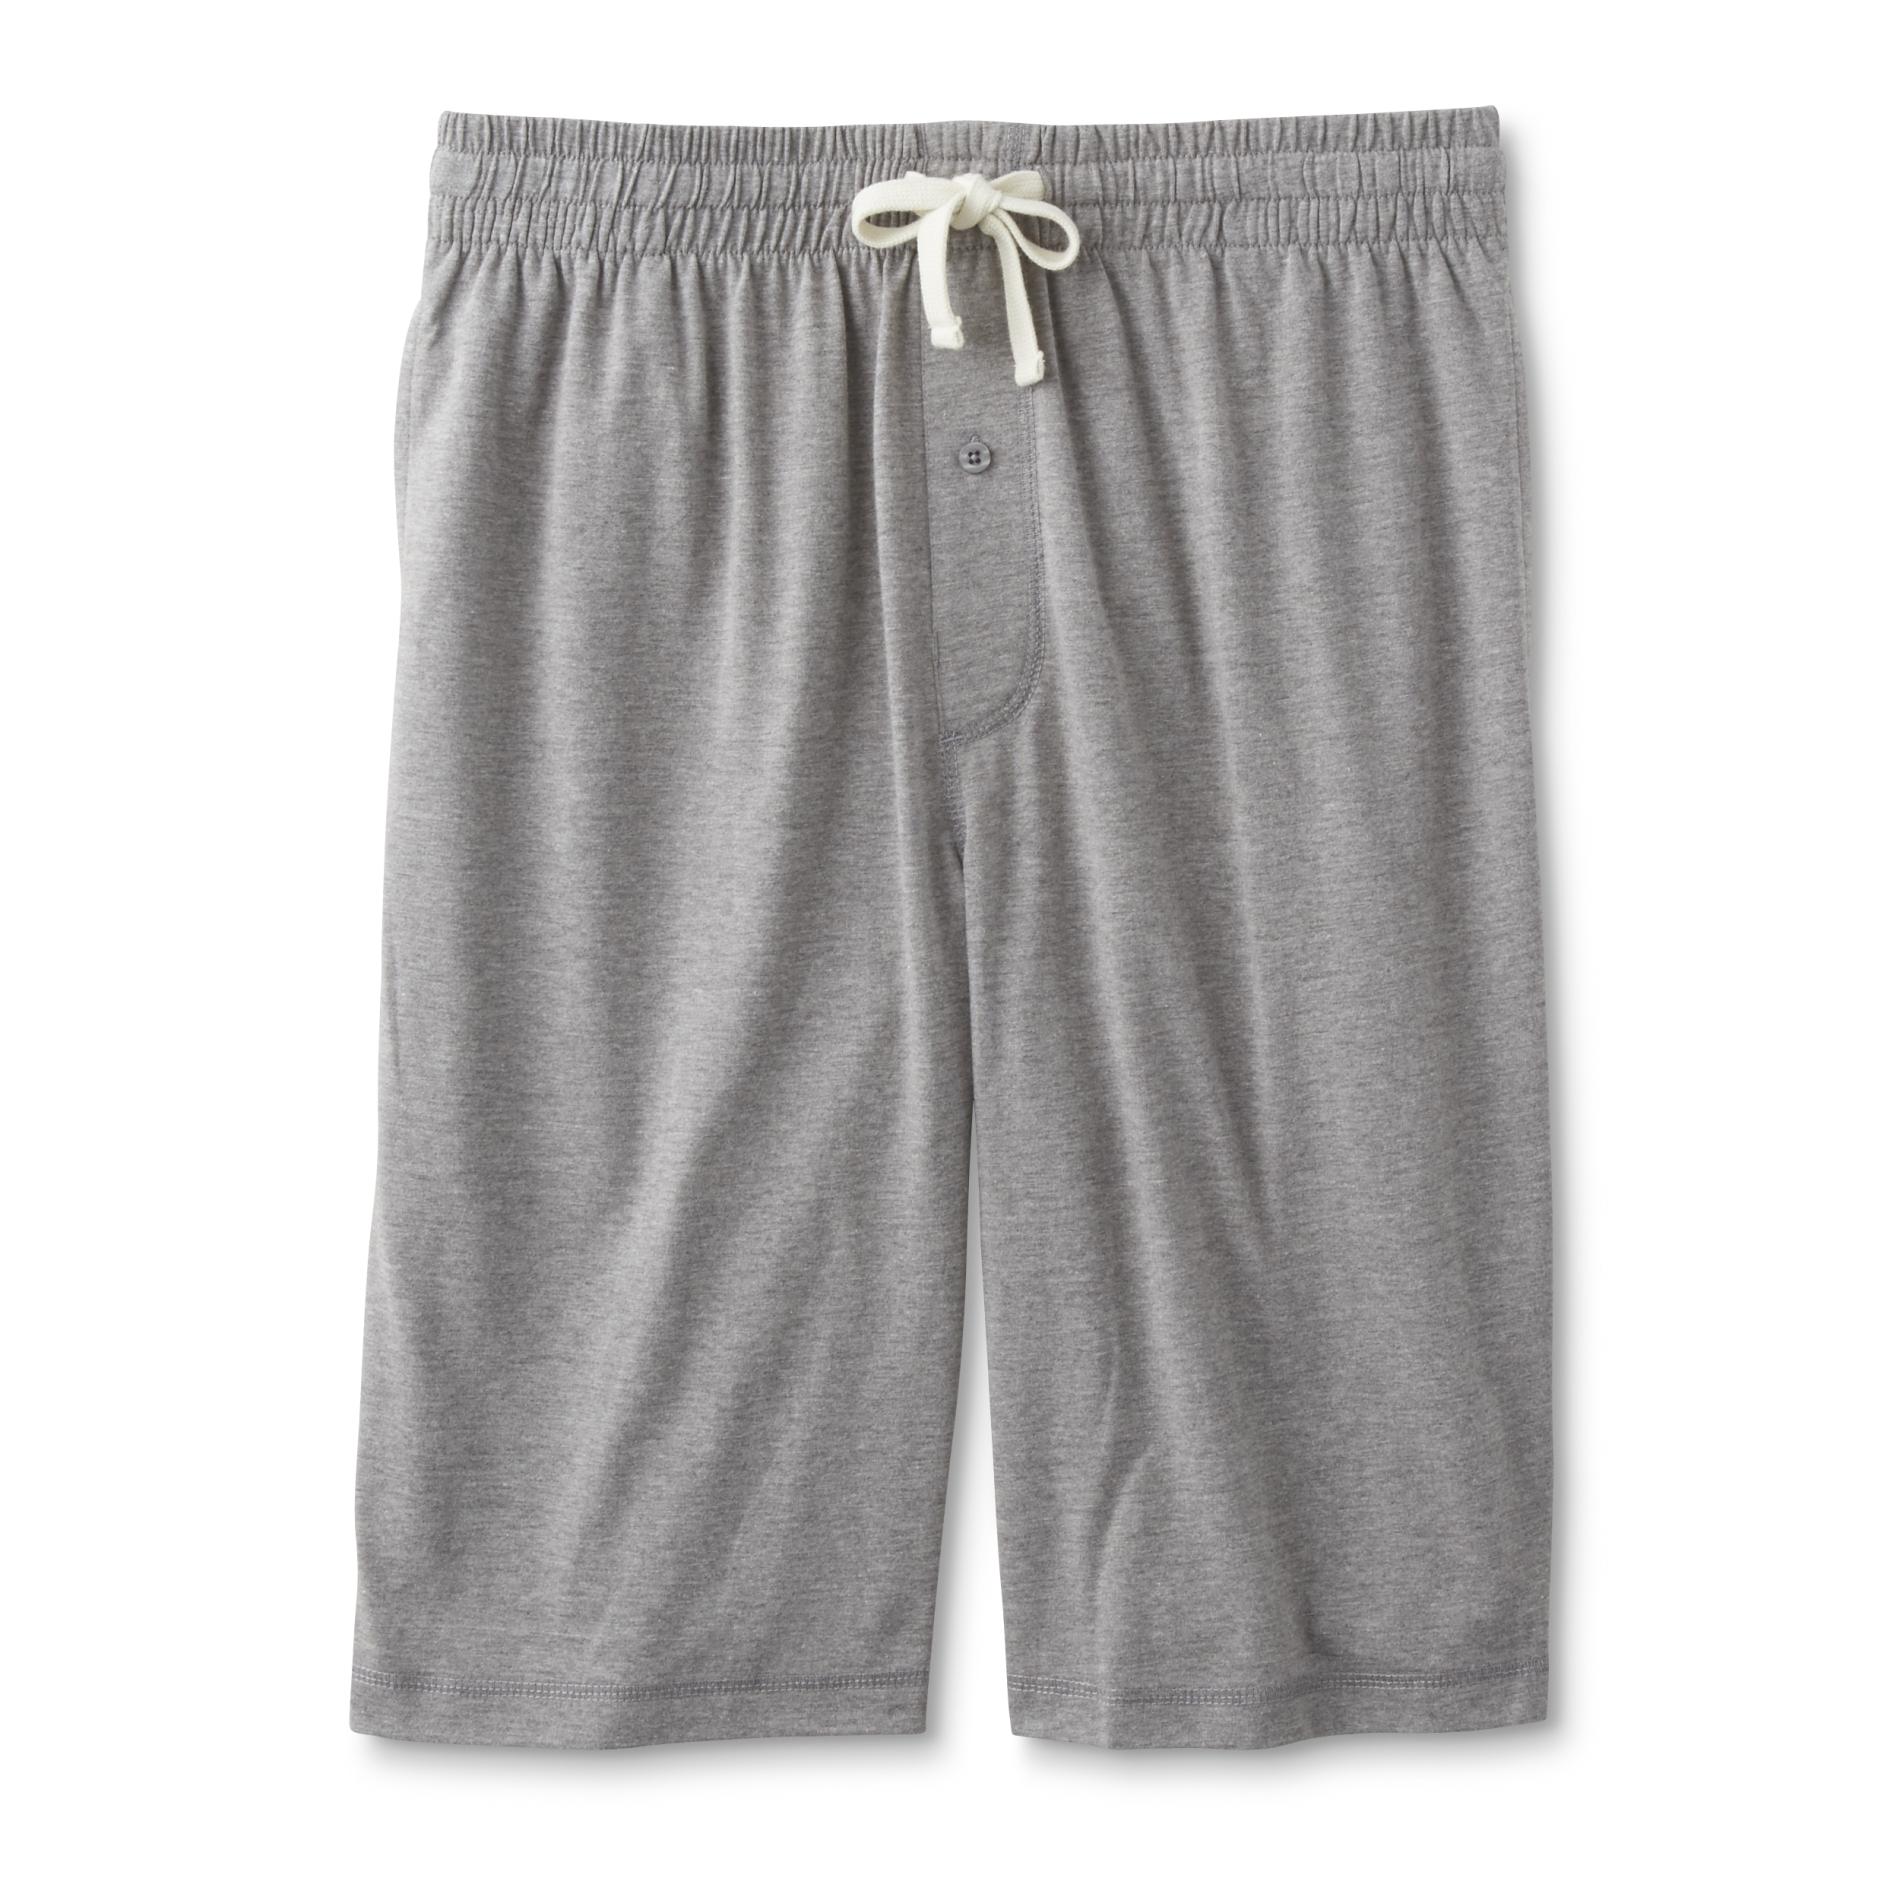 Basic Editions Men's Knit Shorts